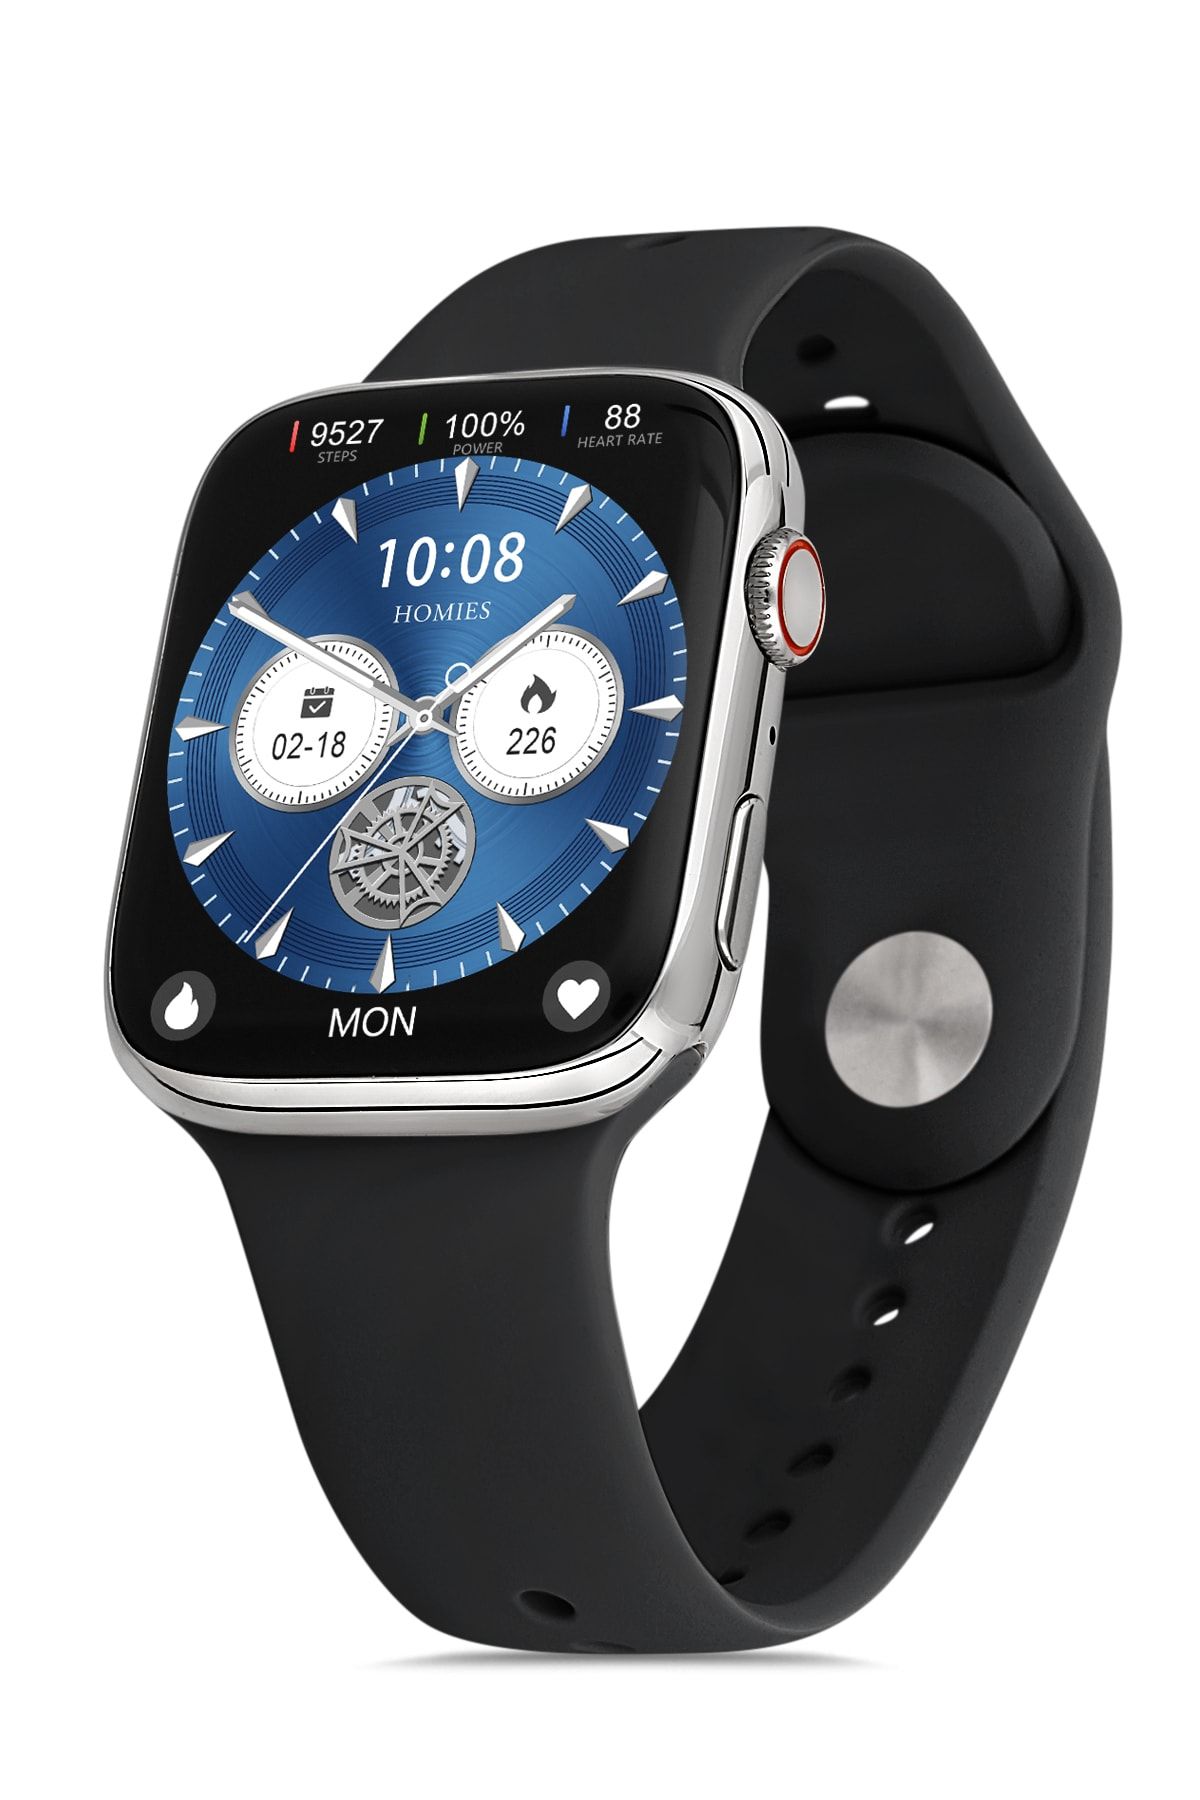 Homies Orjinal Akıllı Saat Special Edition 8. Nesil Ios Ve Android Uyumlu Çelik Kasa Akıllı Saat Hsw11908m